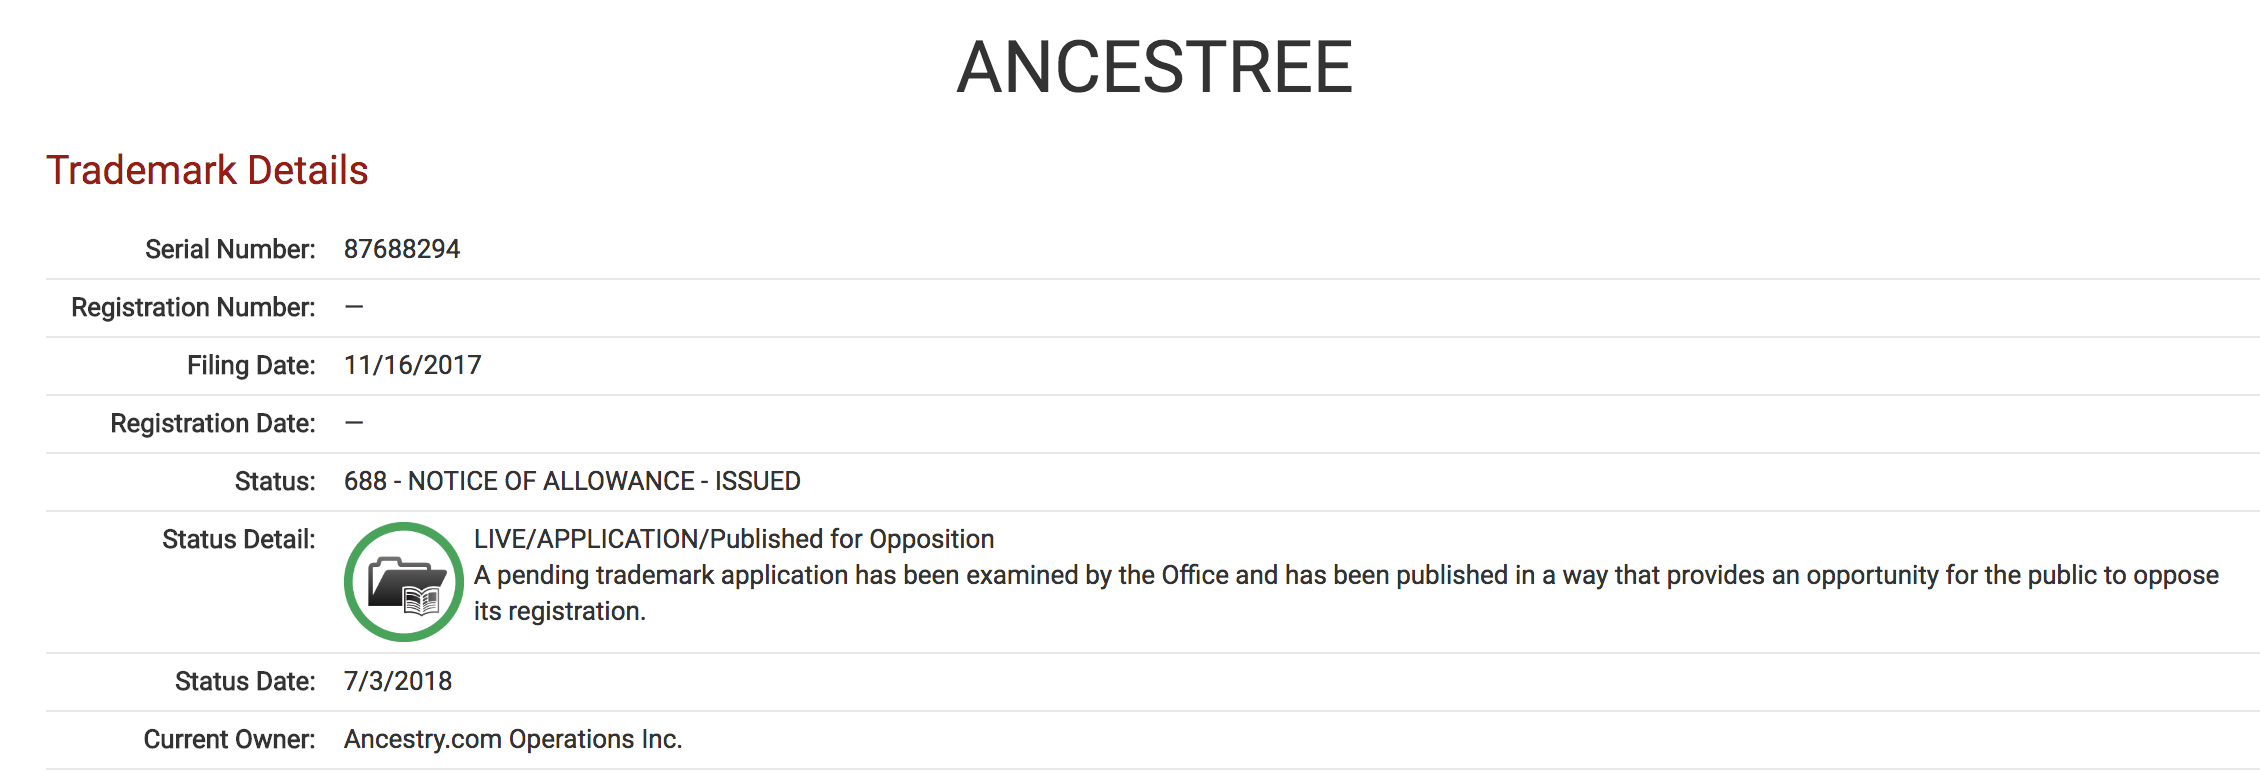 Ancestree Trademark